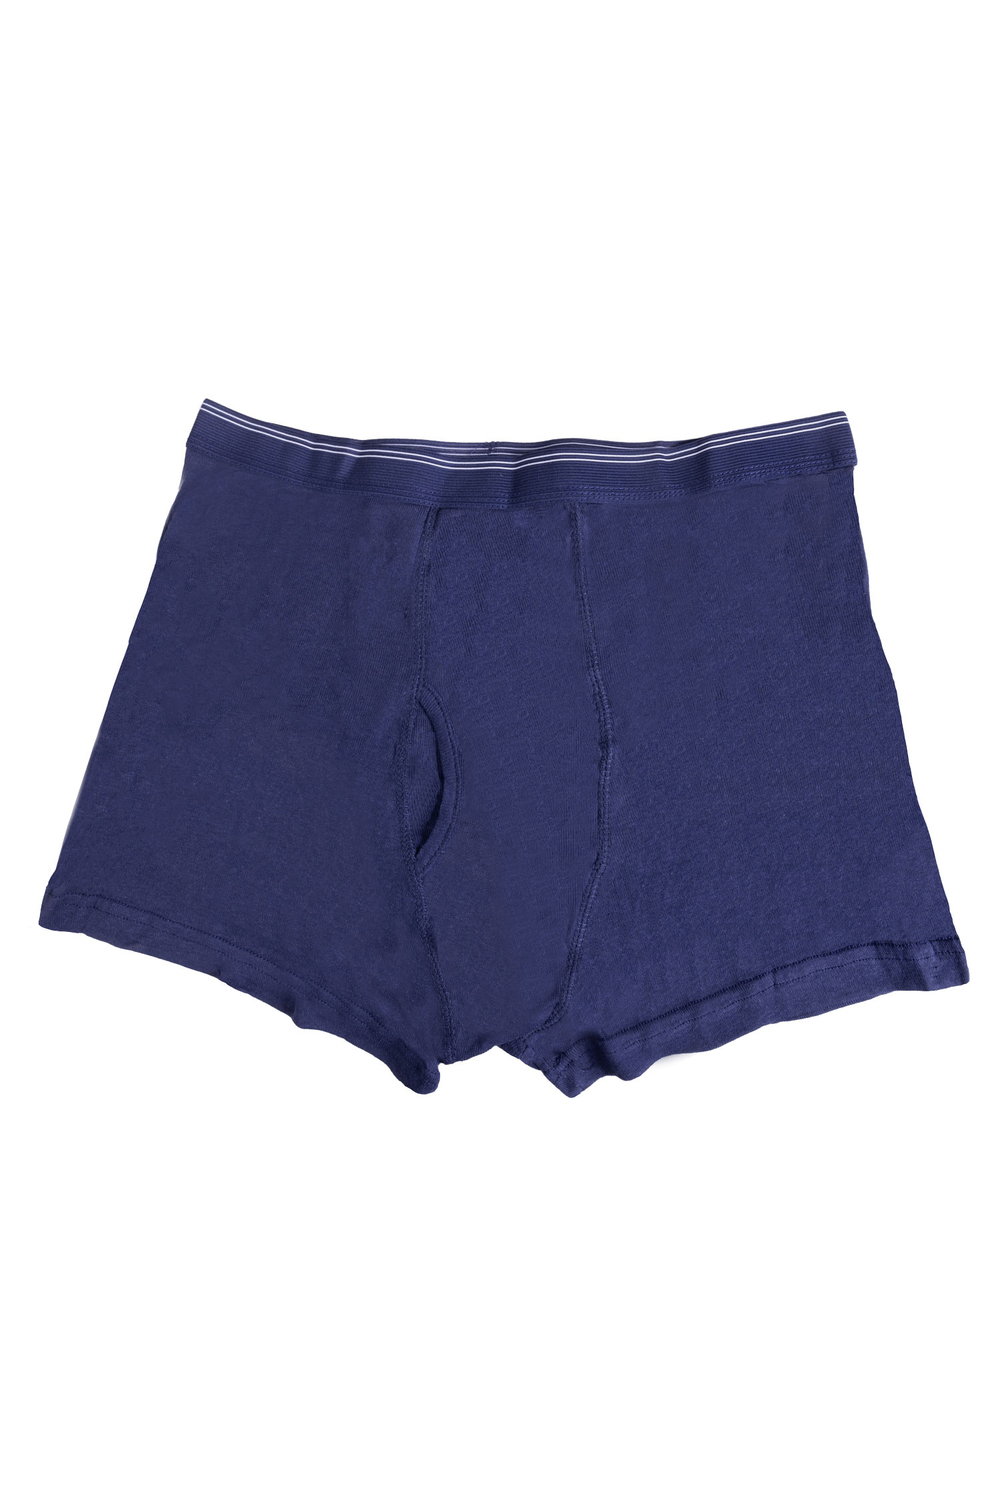 Big Bill 7 oz Polartec® Power Dry® FR Seamless Underwear boxer - DW10PD7